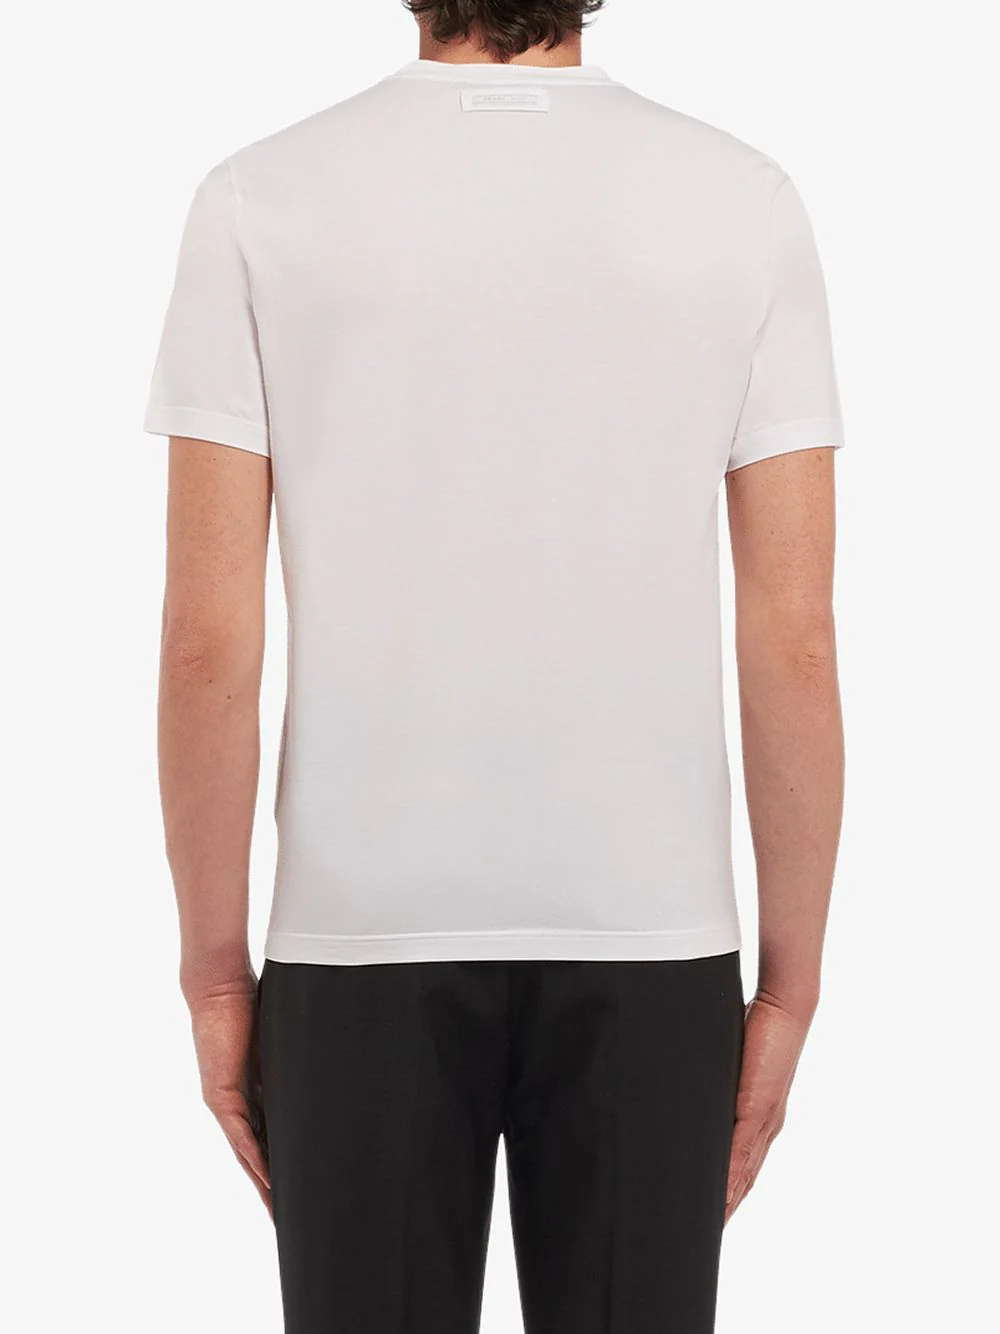 PRADA classic fitted t-shirt white-11